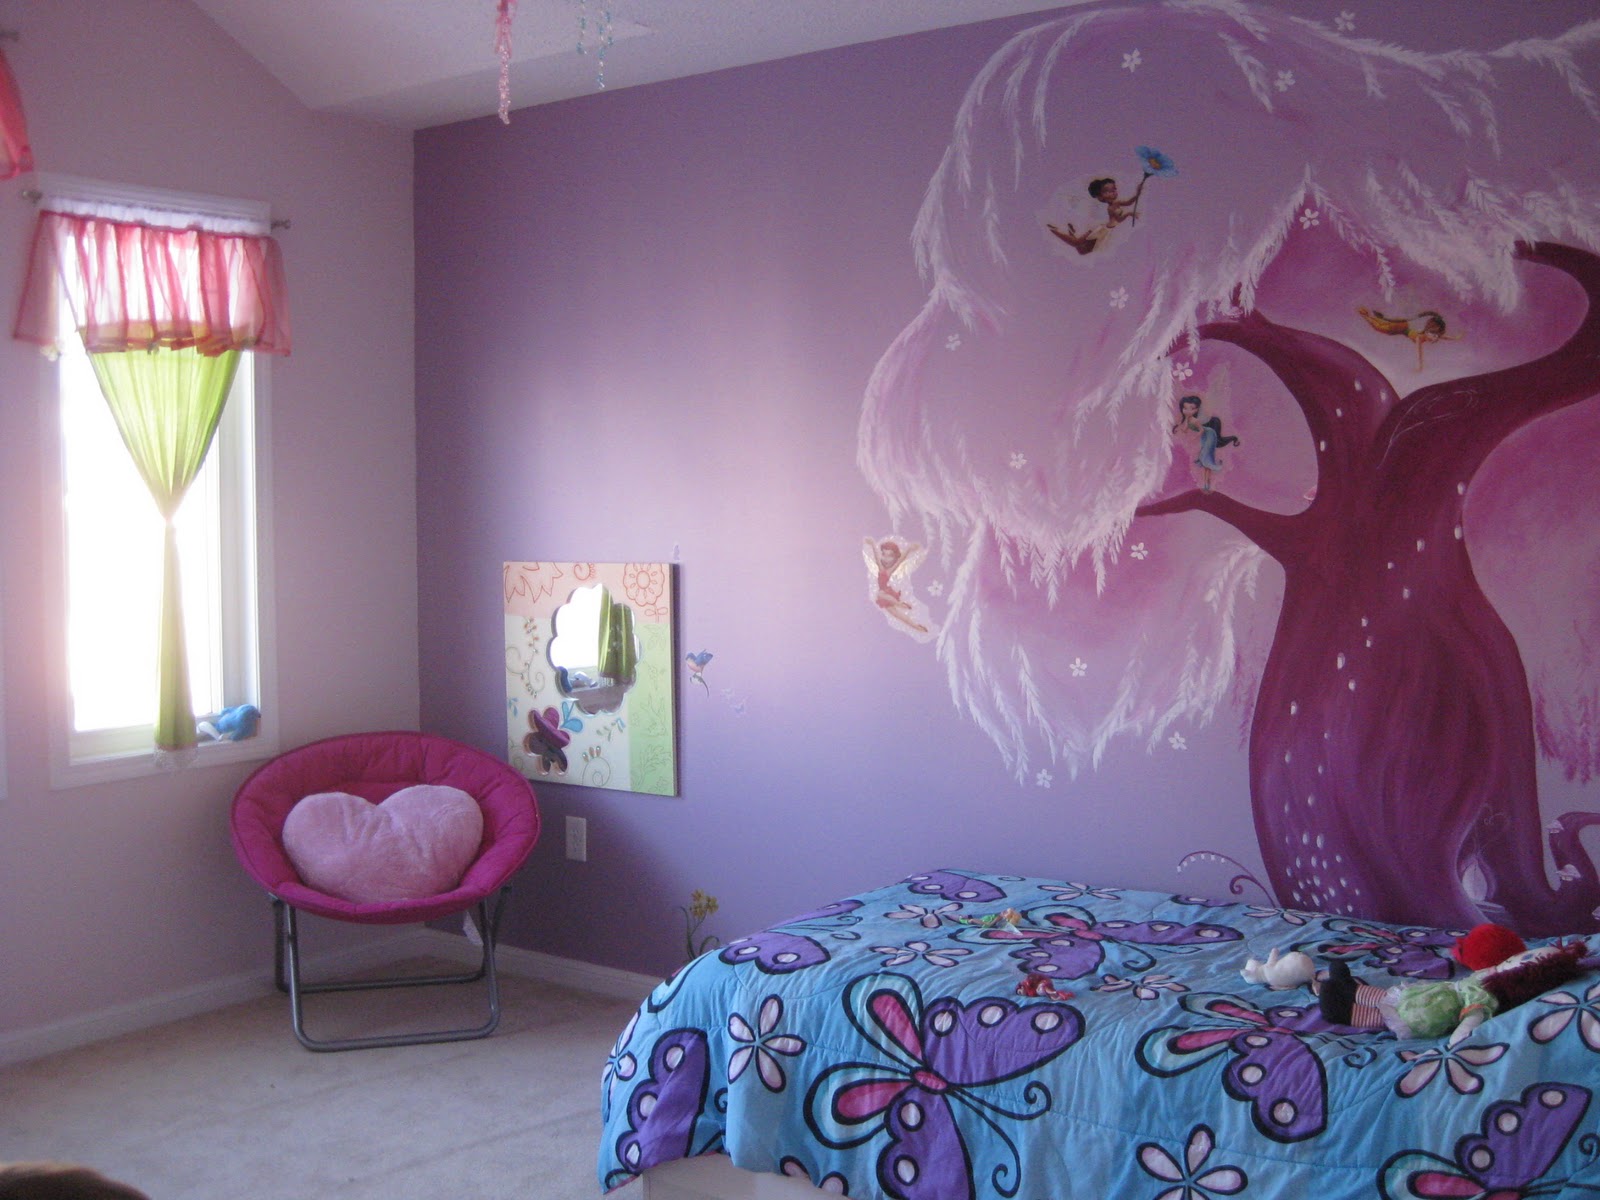 Amelie's bedroom mural - paint